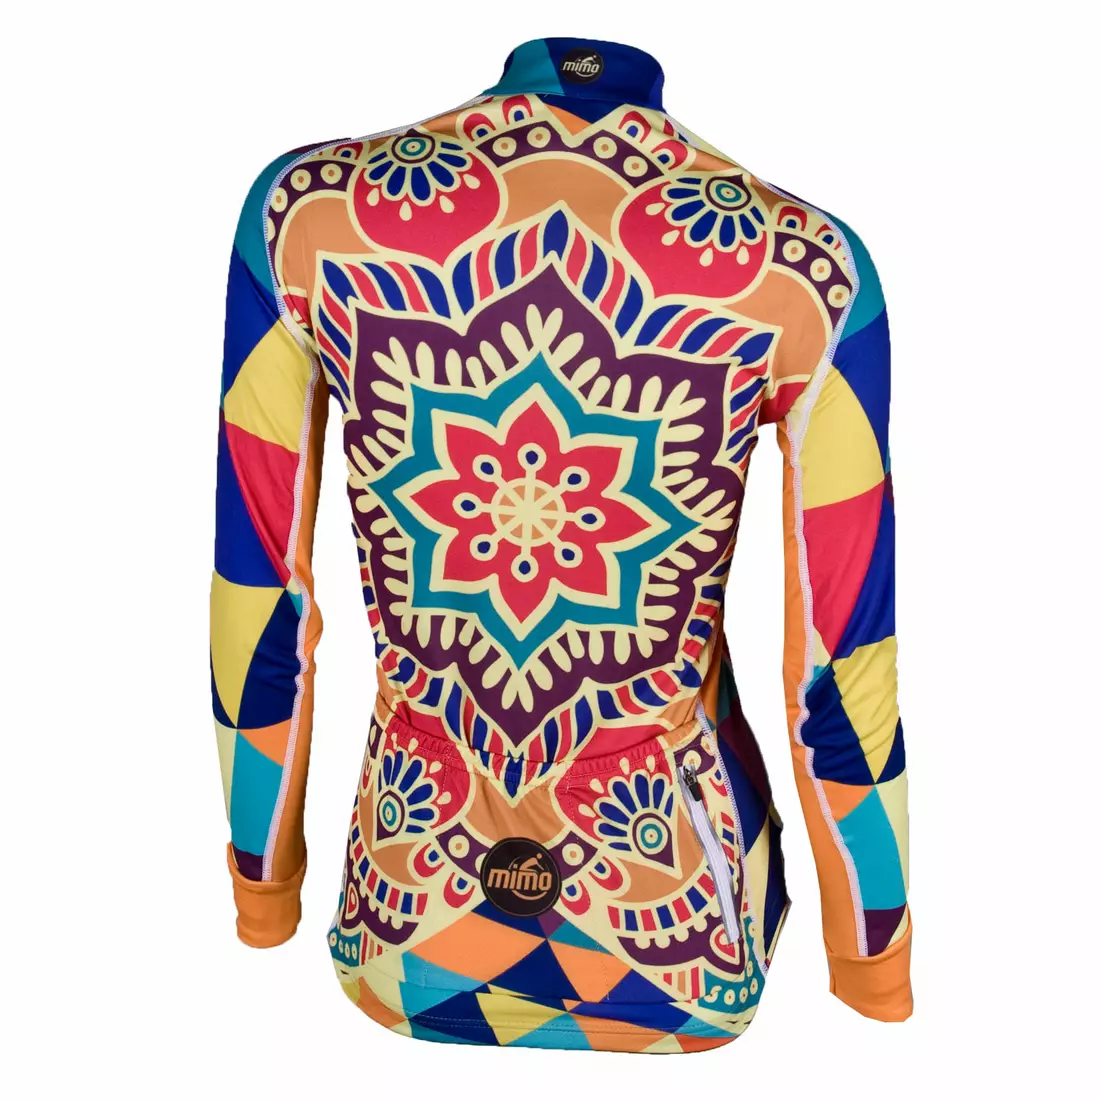 MikeSPORT DESIGN MOSAIC women's cycling sweatshirt